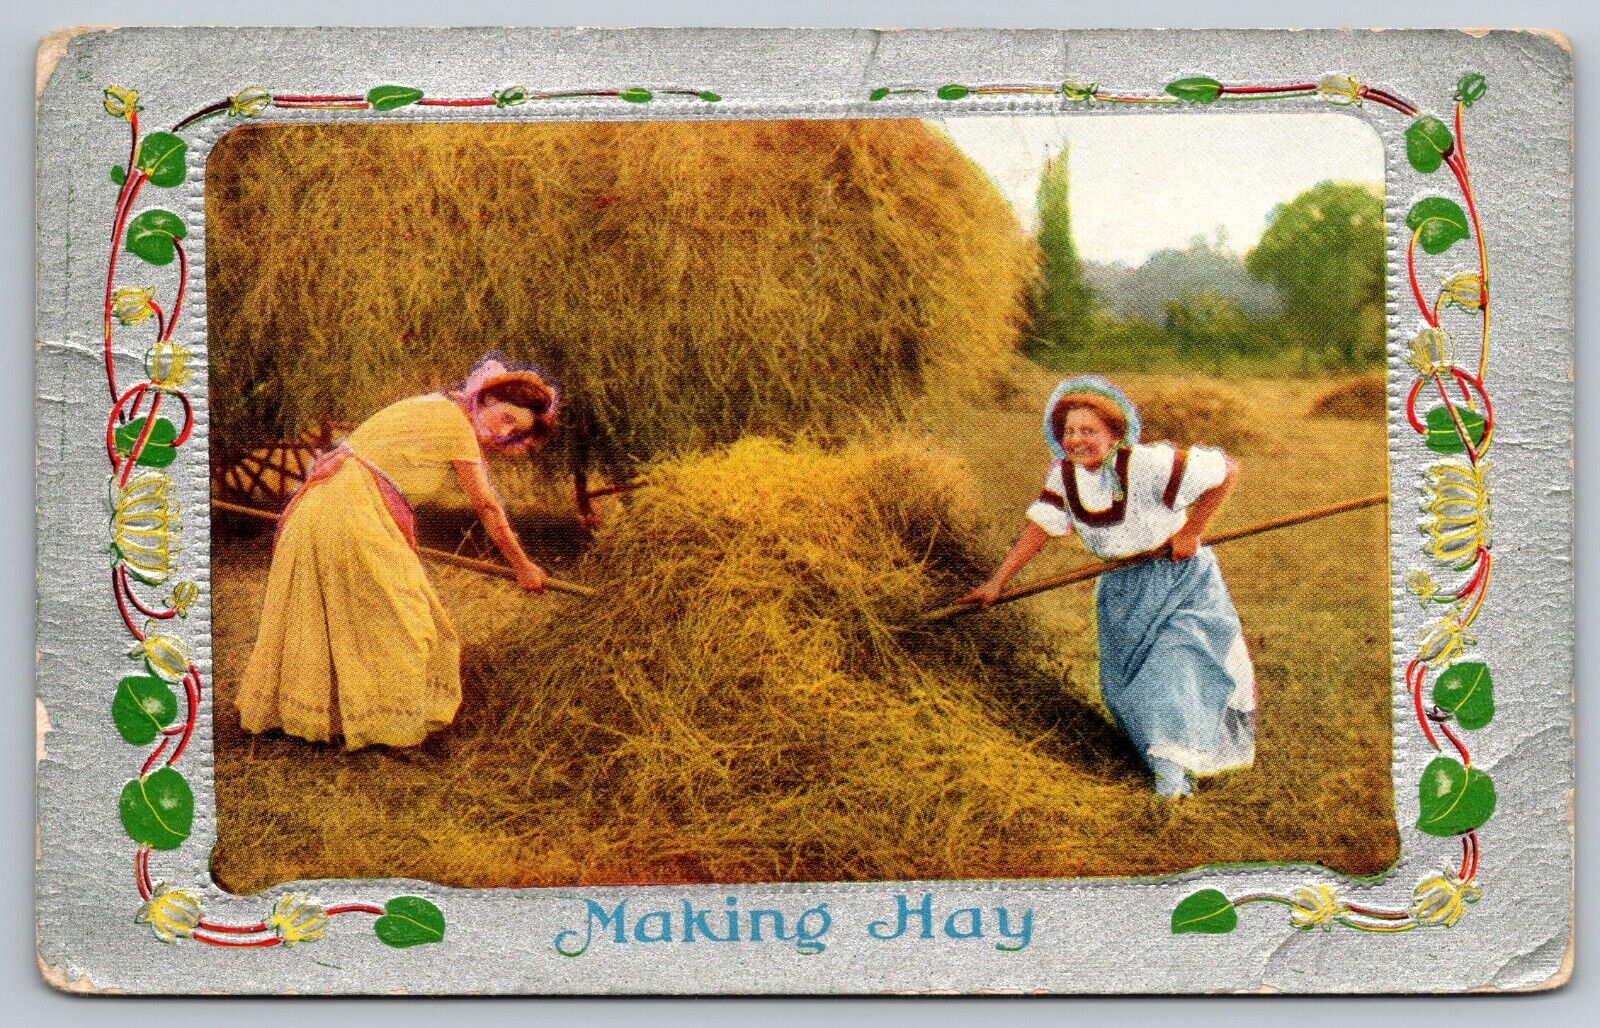 1910s Humor Making Hay Farm Women Pitchfork Haystack Farming Joke Old Postcard